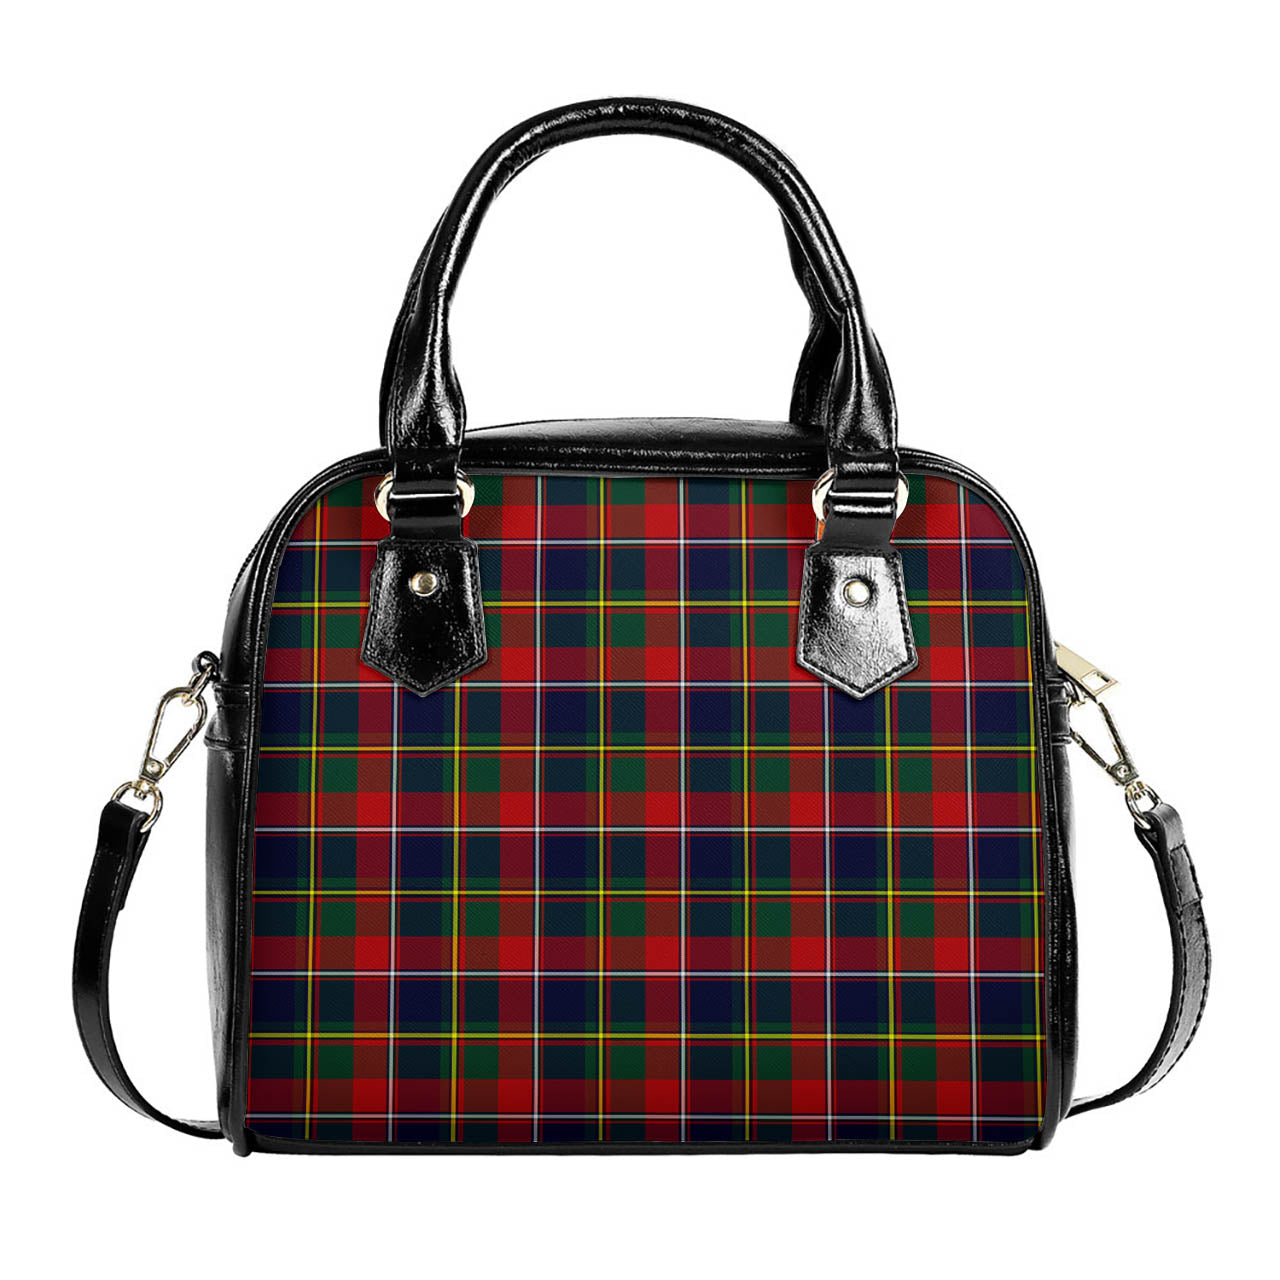 Quebec Province Canada Tartan Shoulder Handbags One Size 6*25*22 cm - Tartanvibesclothing